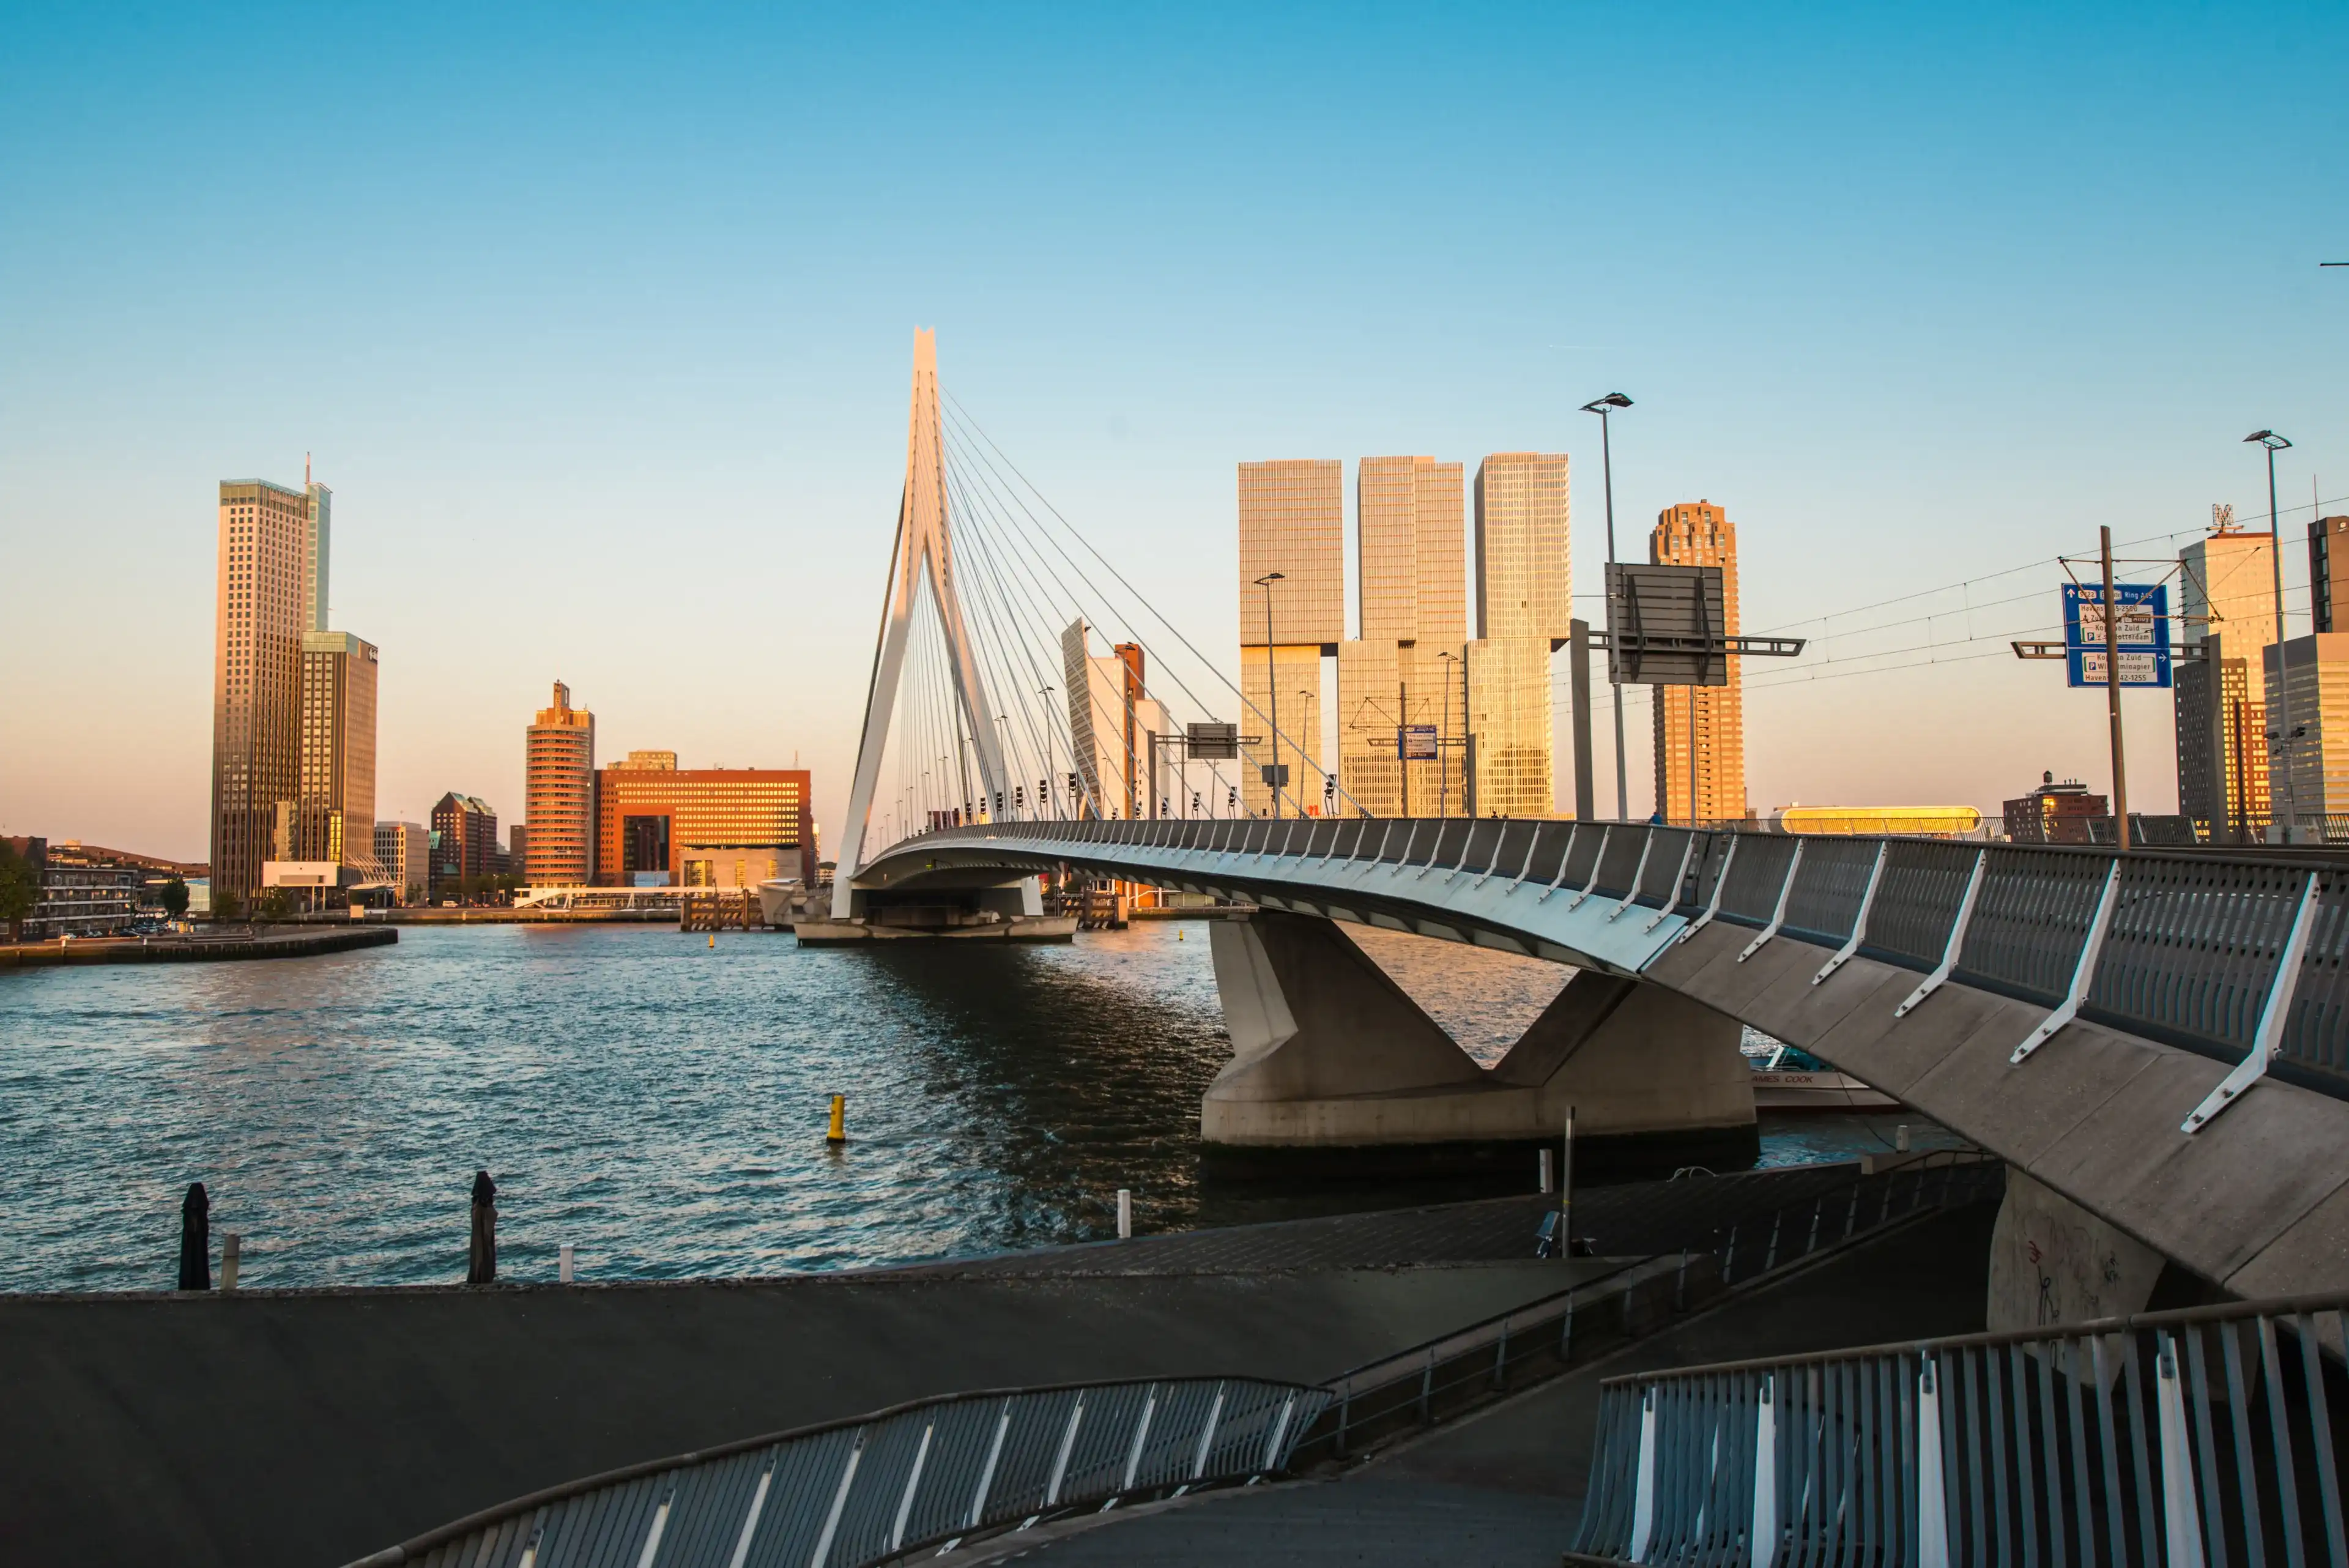 Best Rotterdam hotels. Cheap hotels in Rotterdam, Netherlands